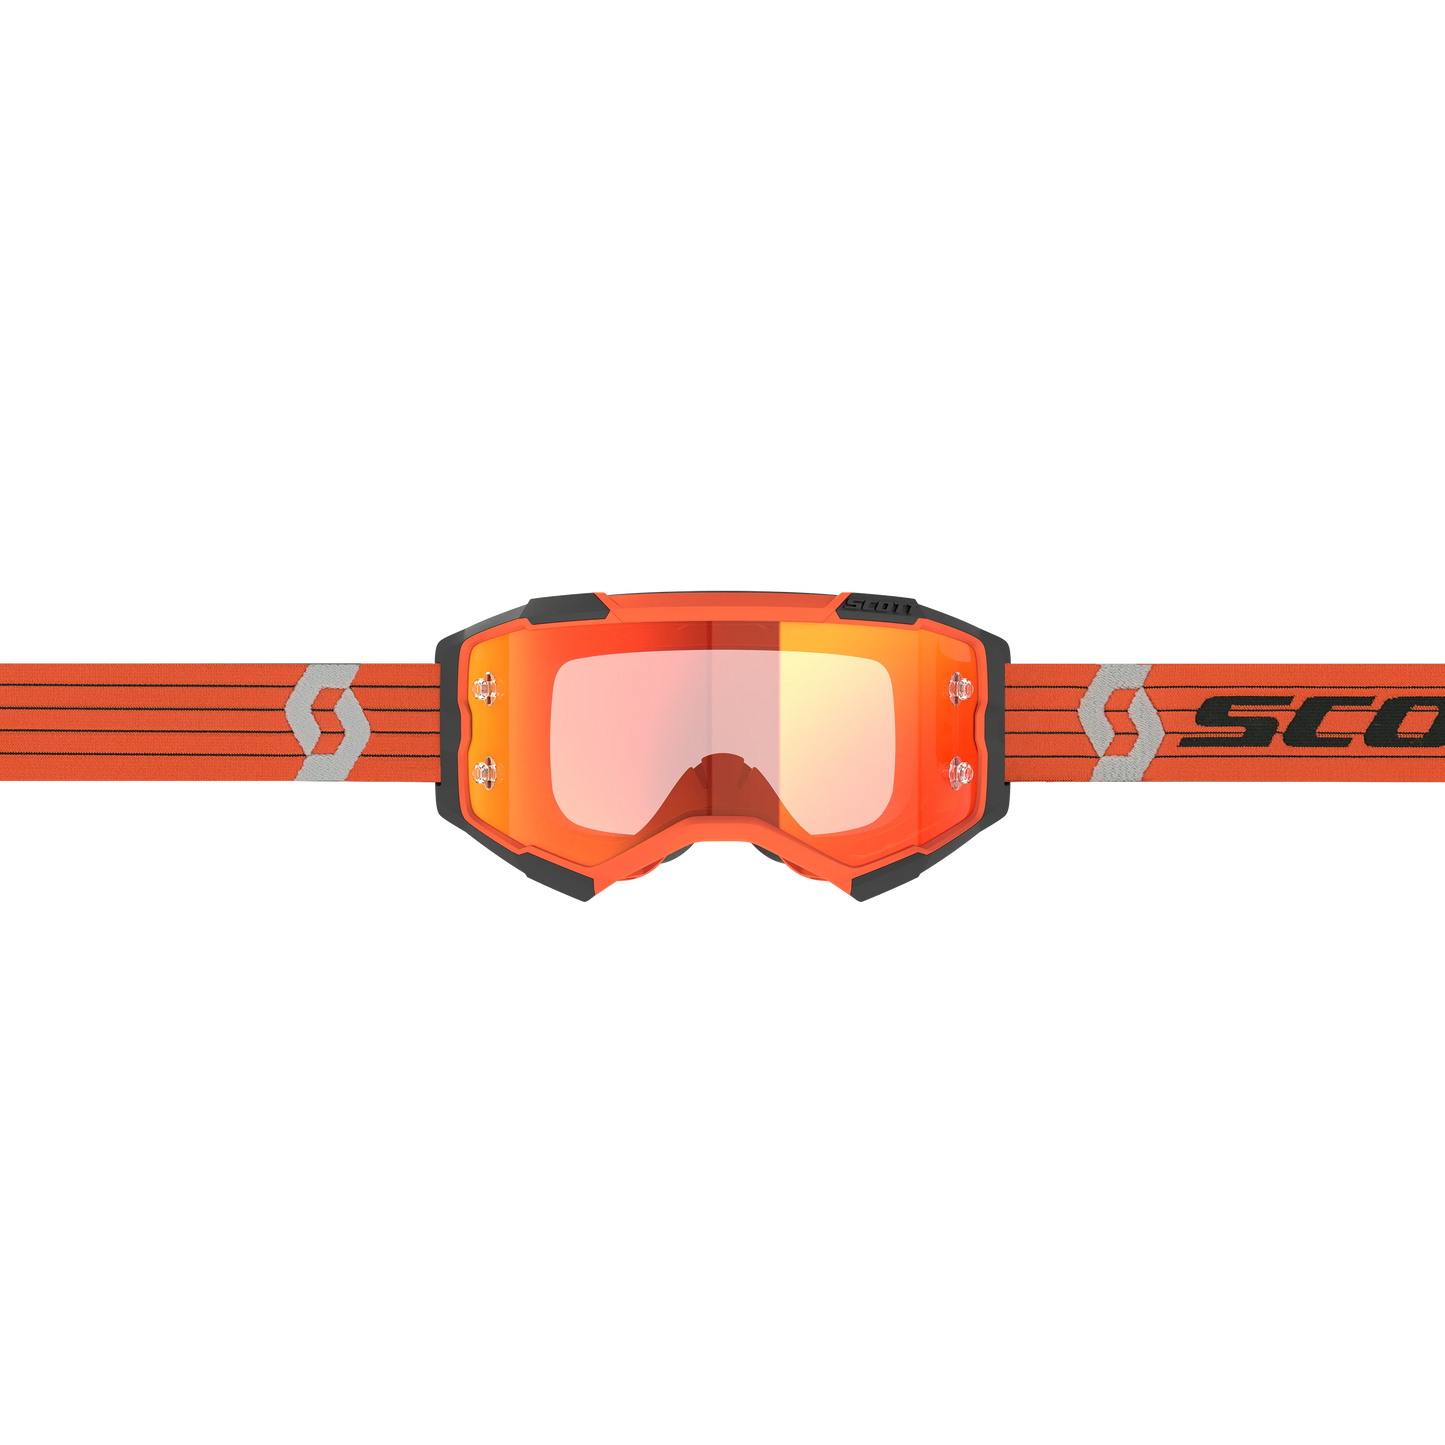 Scott Fury Goggles, Orange / Grey - Orange Chrome Works Lens